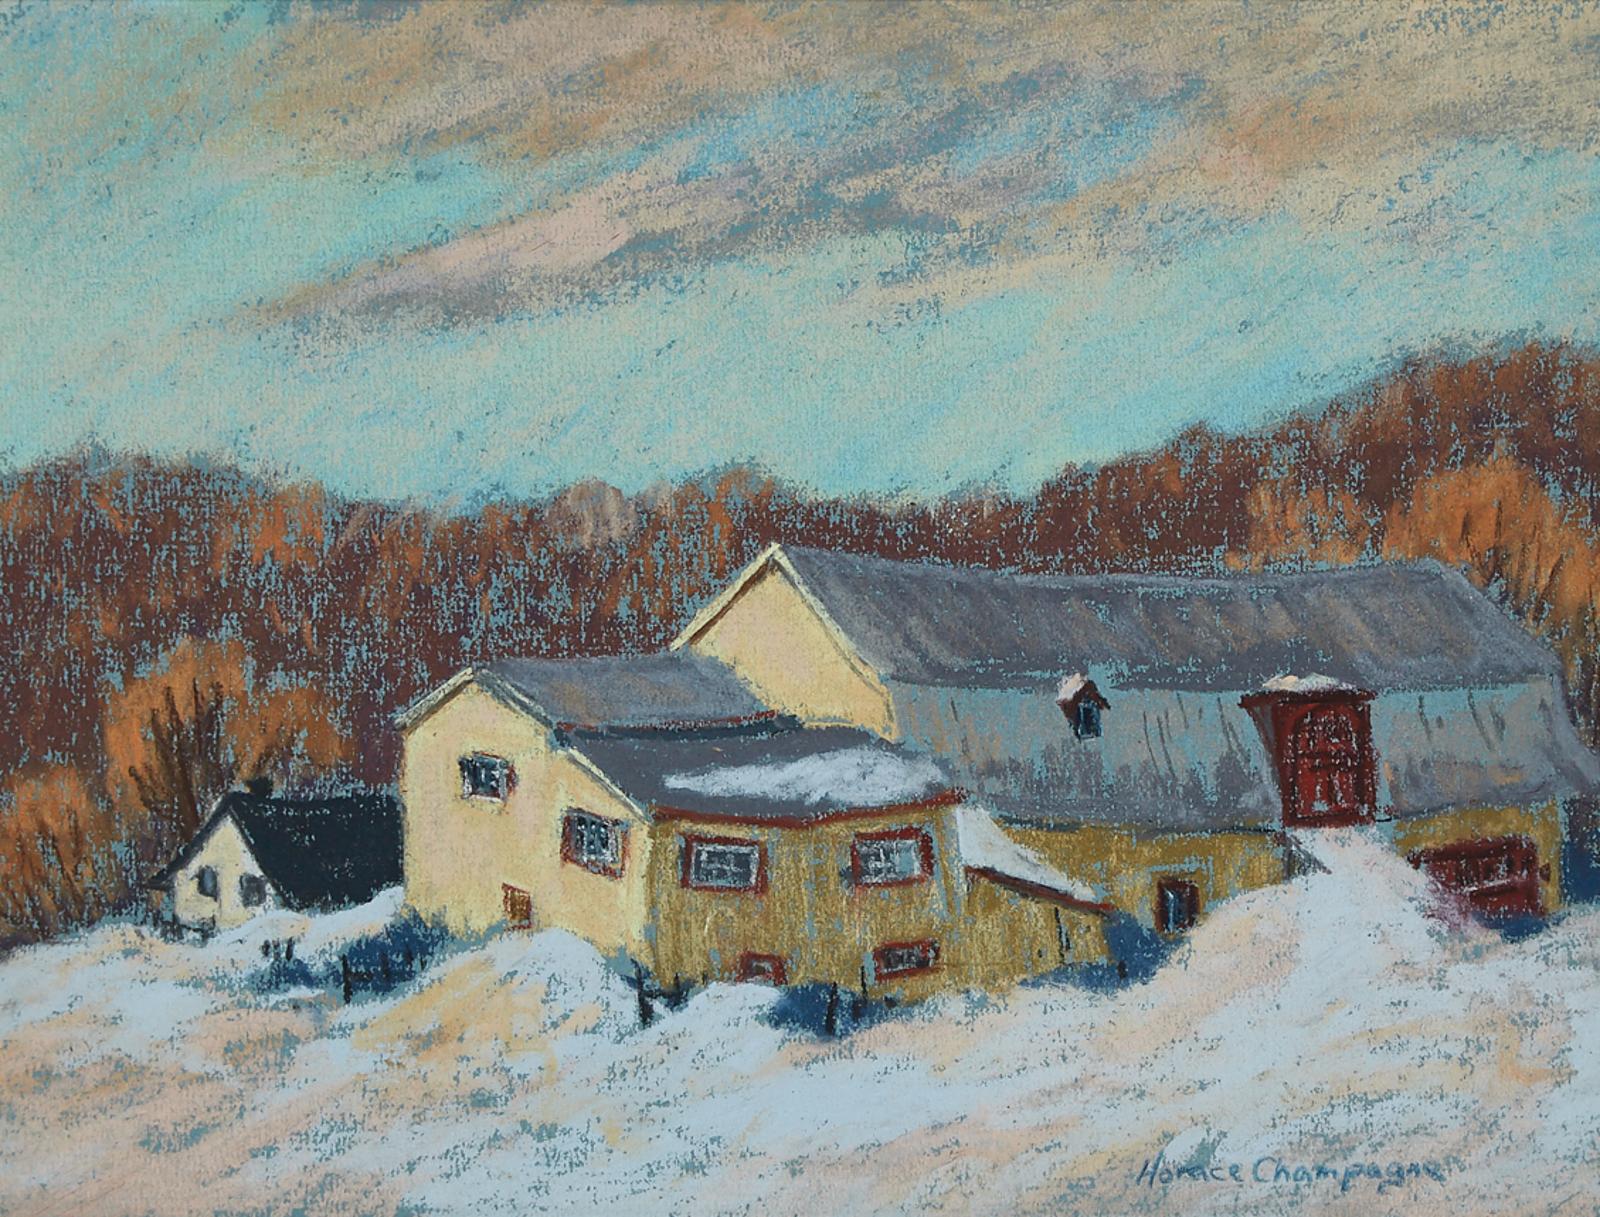 Horace Champagne (1937) - Sunset, St. Joachim, Quebec, 1982